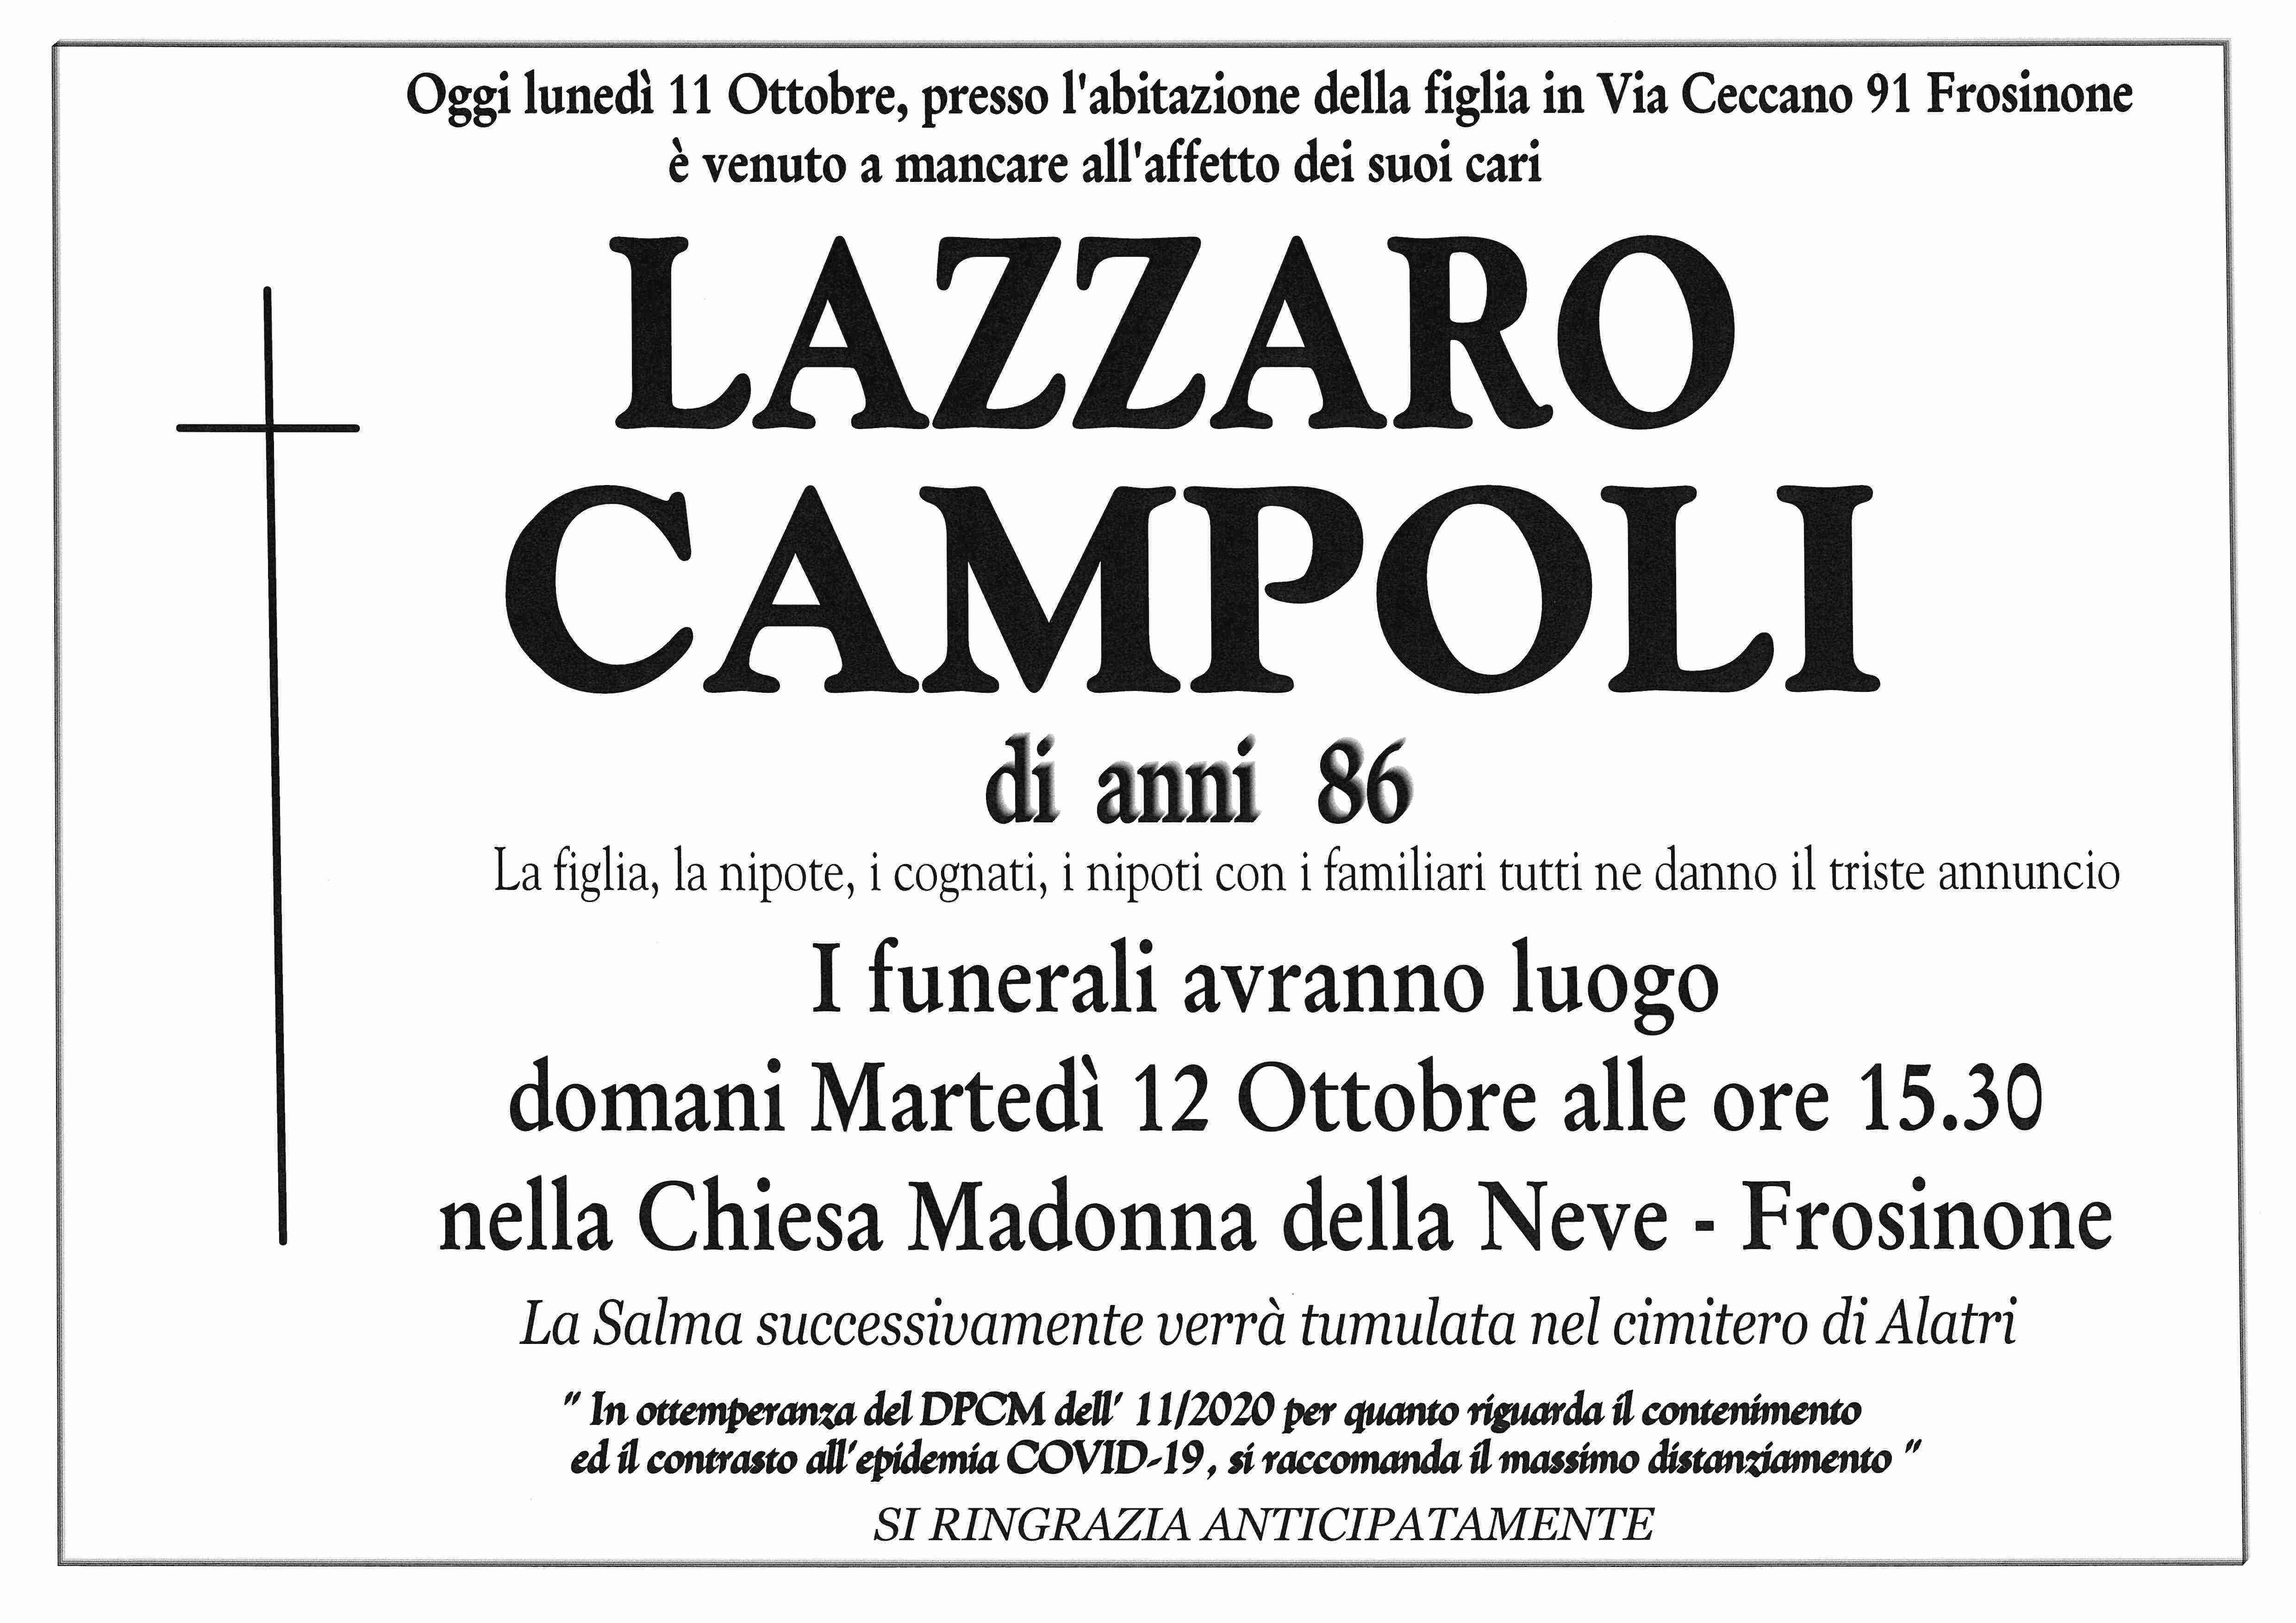 Lazzaro Campoli